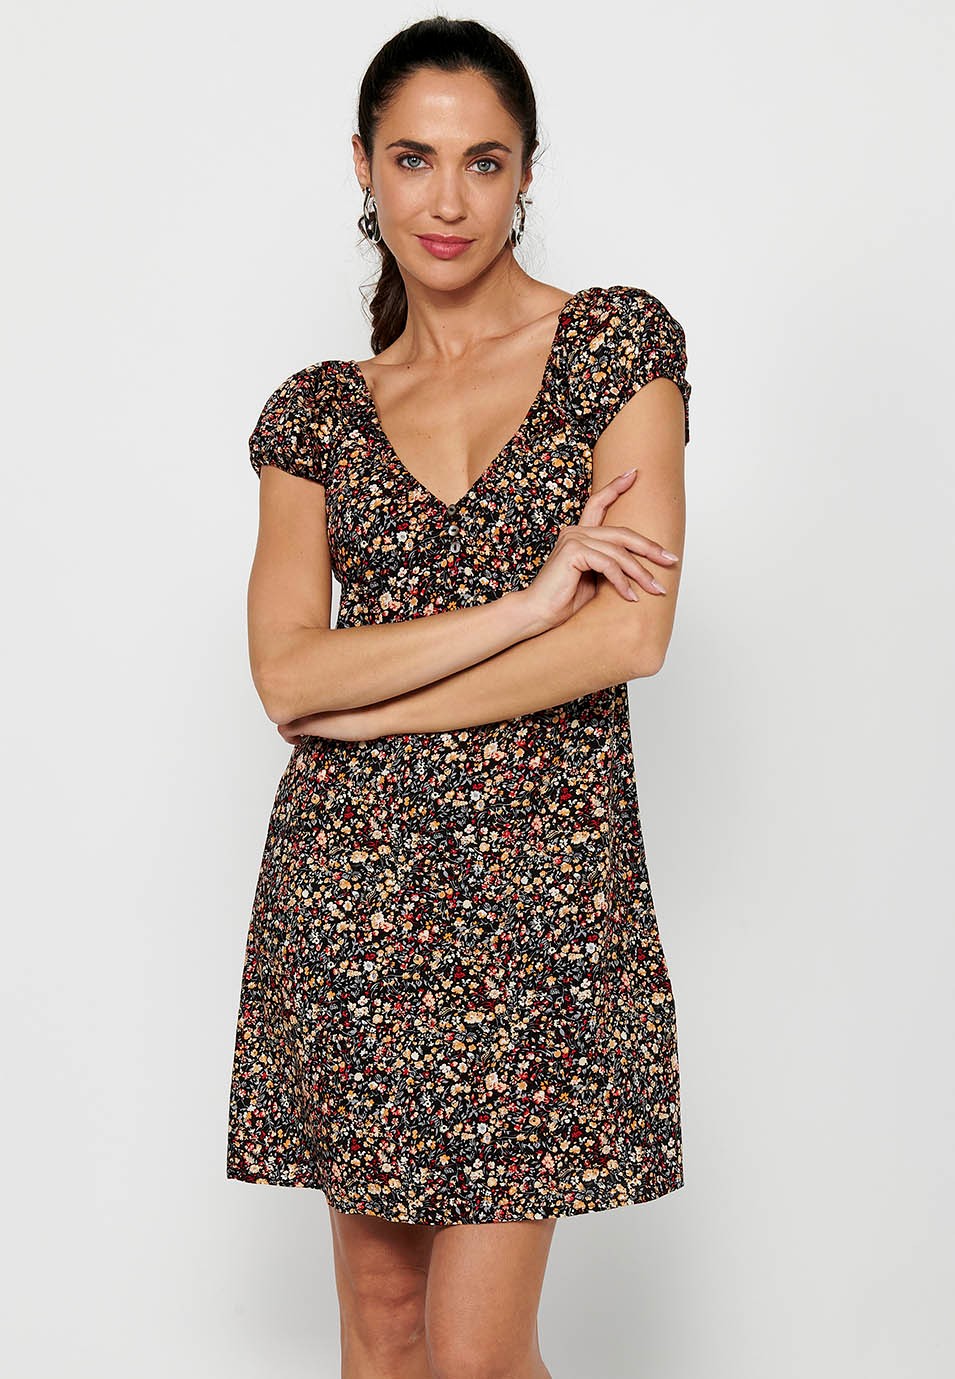 Damen-Kleid mit mehrfarbigem Blumendruck, kurzen Ärmeln, gerafftem Ausschnitt und Reißverschluss hinten 1